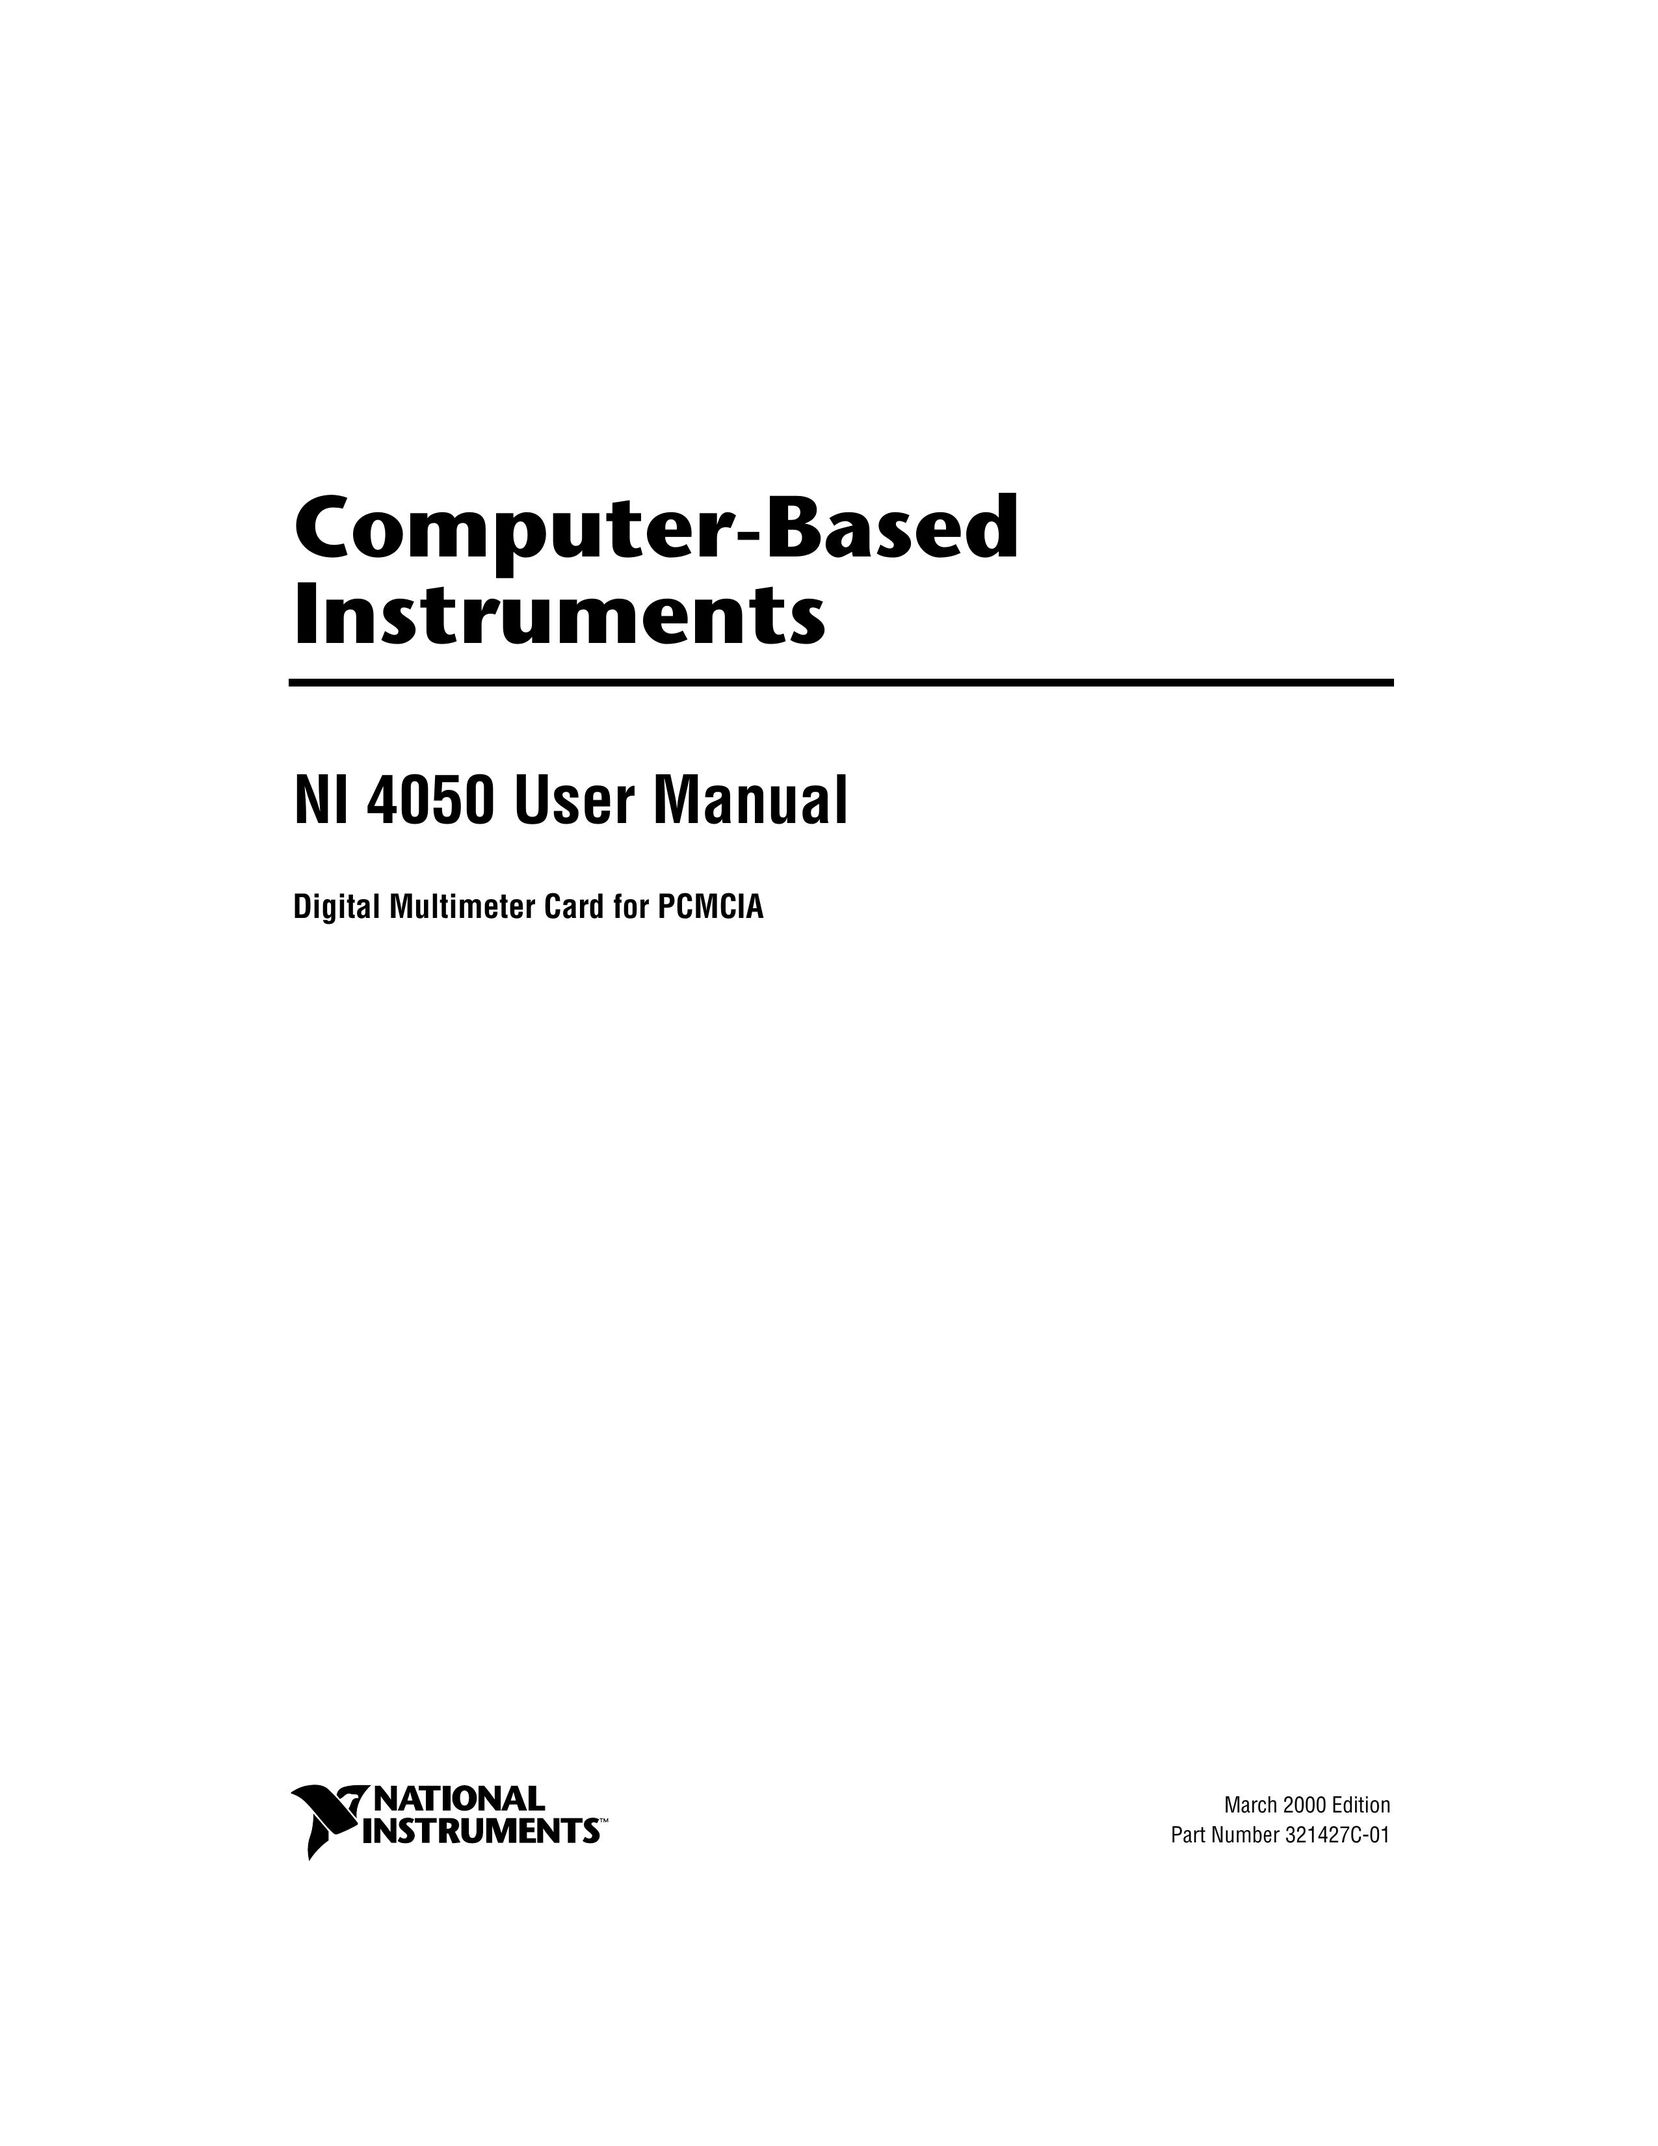 National Instruments NI 4050 Computer Hardware User Manual